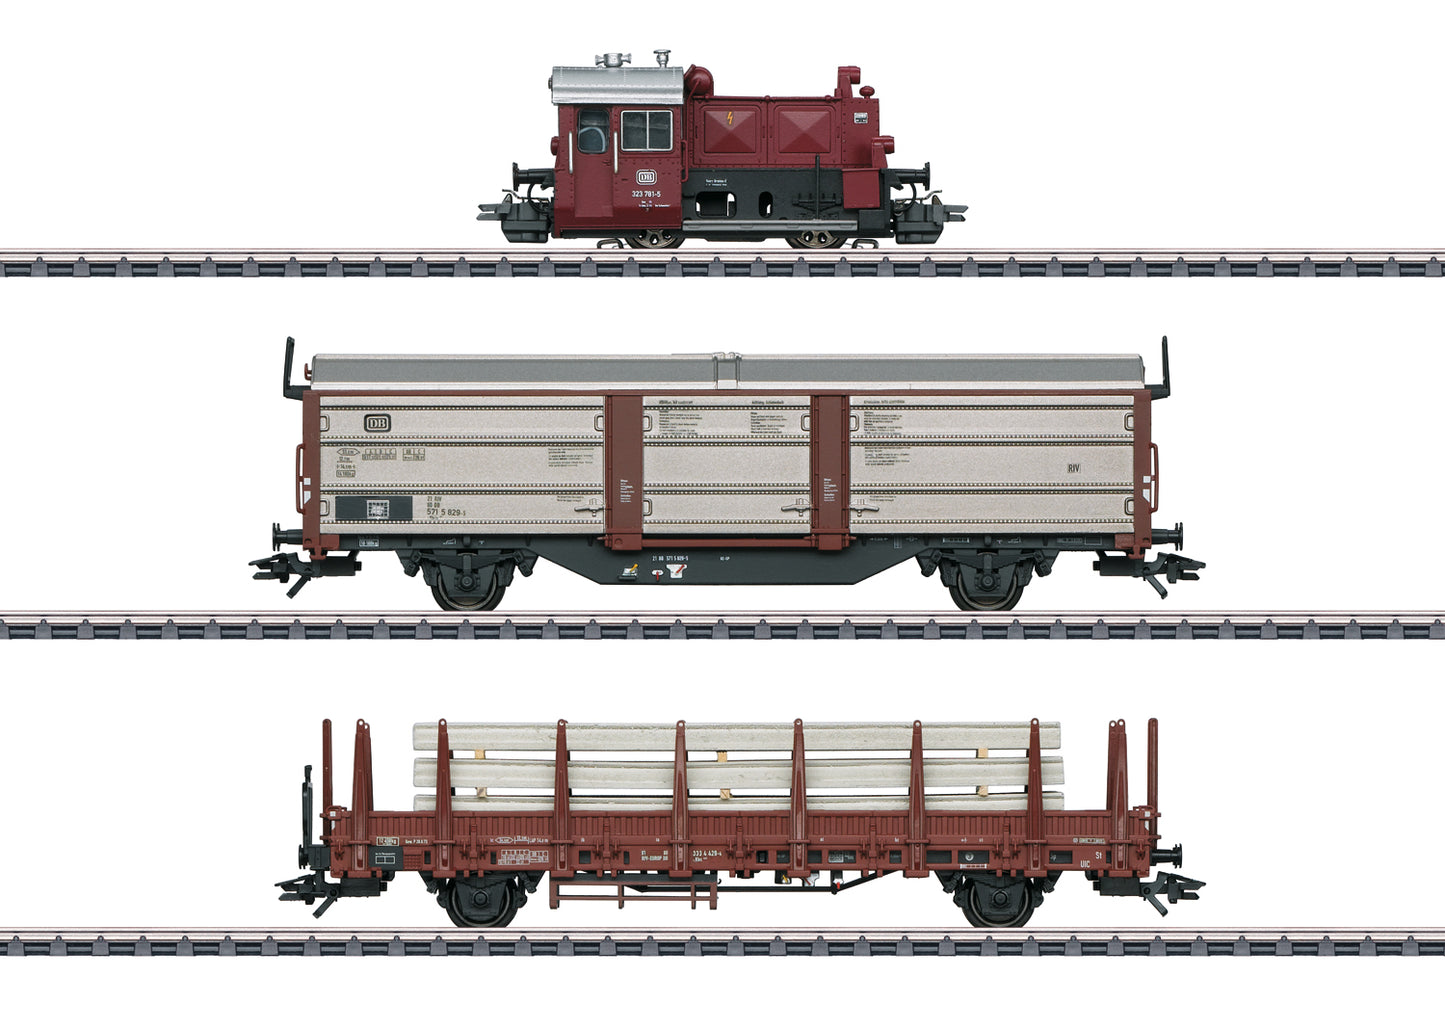 Marklin 26605 - Switching Service Train Set